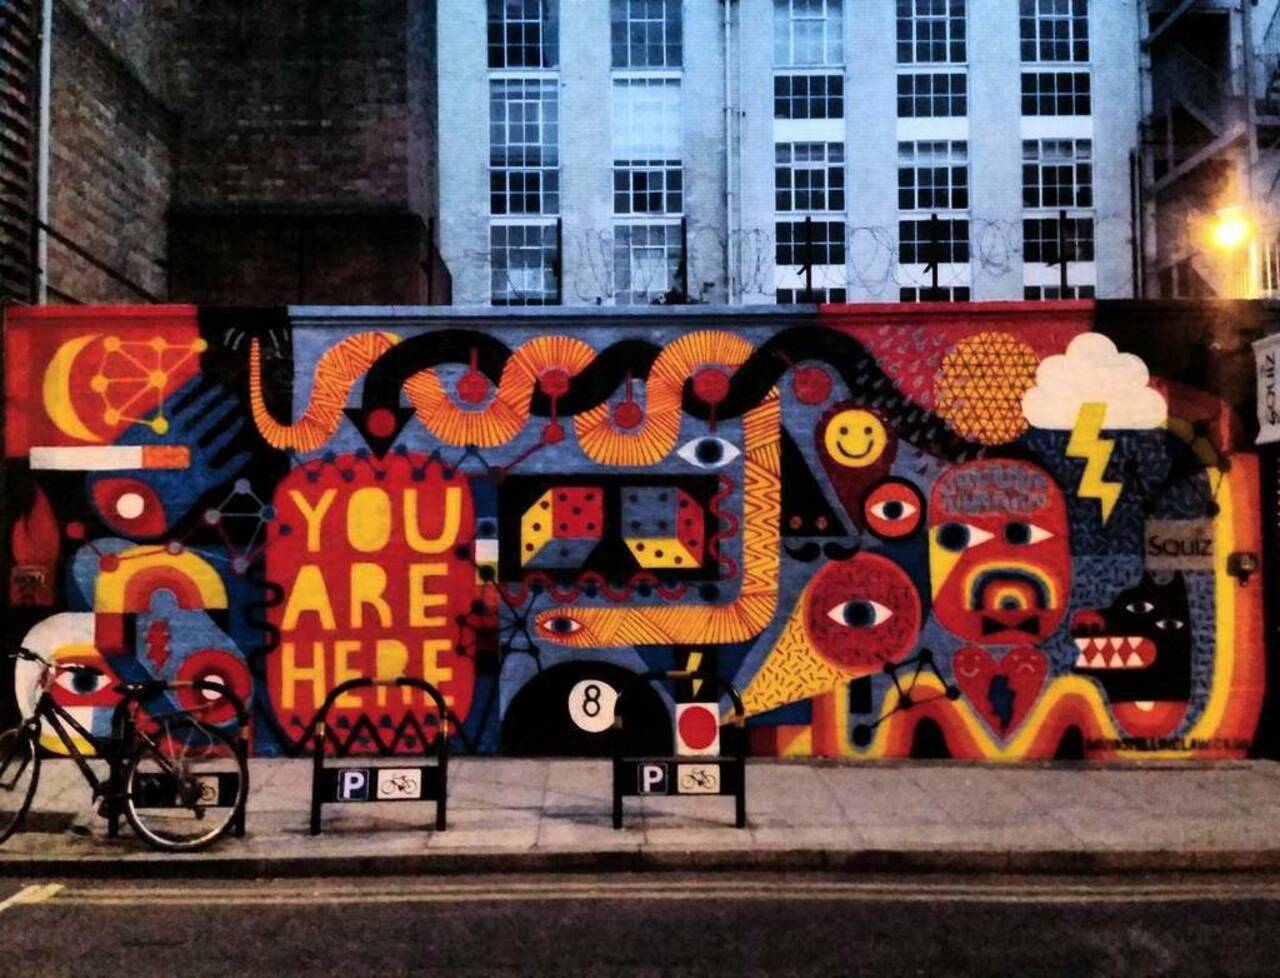 Once true but no longer. Mural by @davidshillinglaw #StreetArt #StreetArtLondon #LondonStreetArt #London #Graffiti … http://t.co/unij21Nfrg